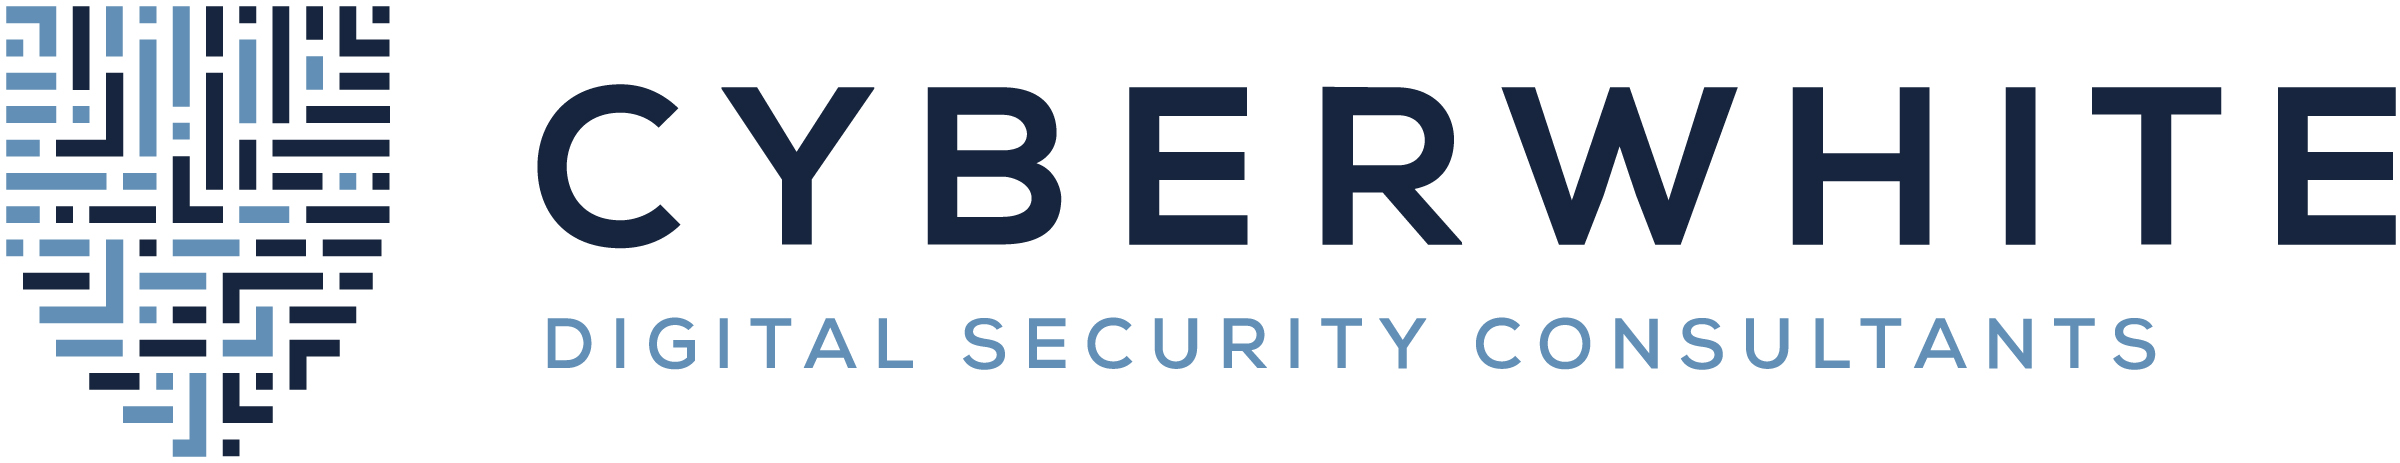 logo for CyberWhite Ltd